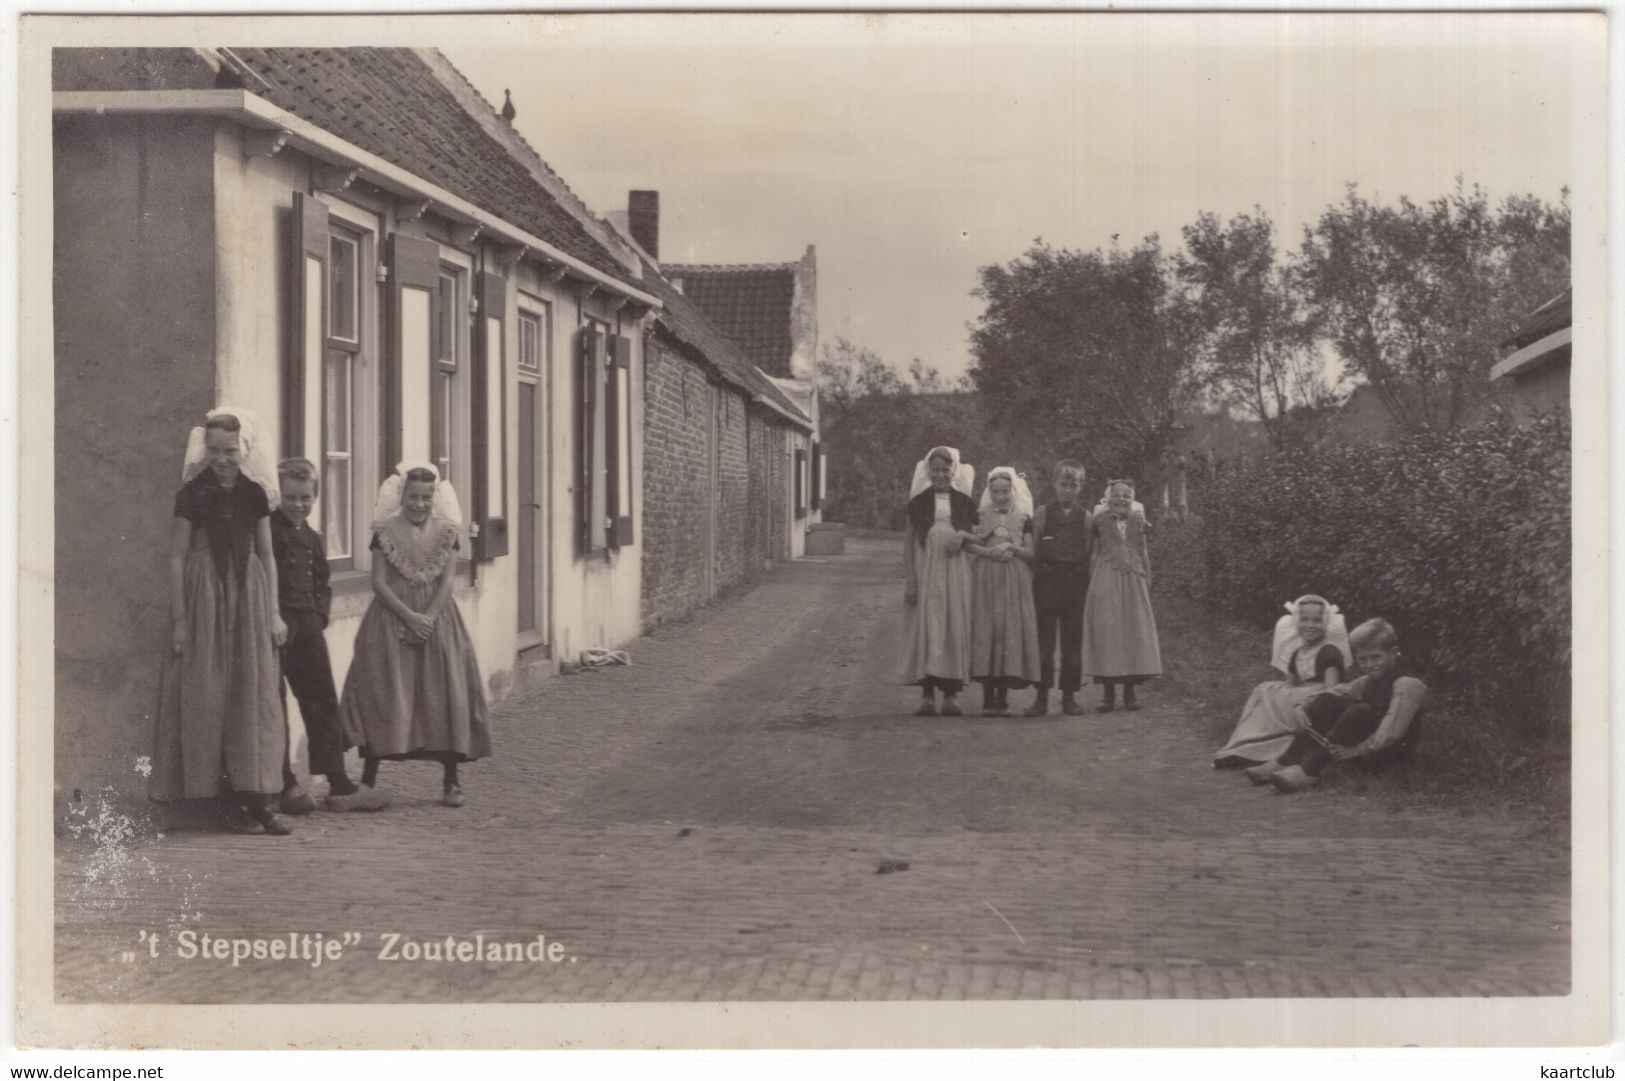 't Stepseltje', Zoutelande.  - (Zeeland,Holland) - 1946 - Zoutelande